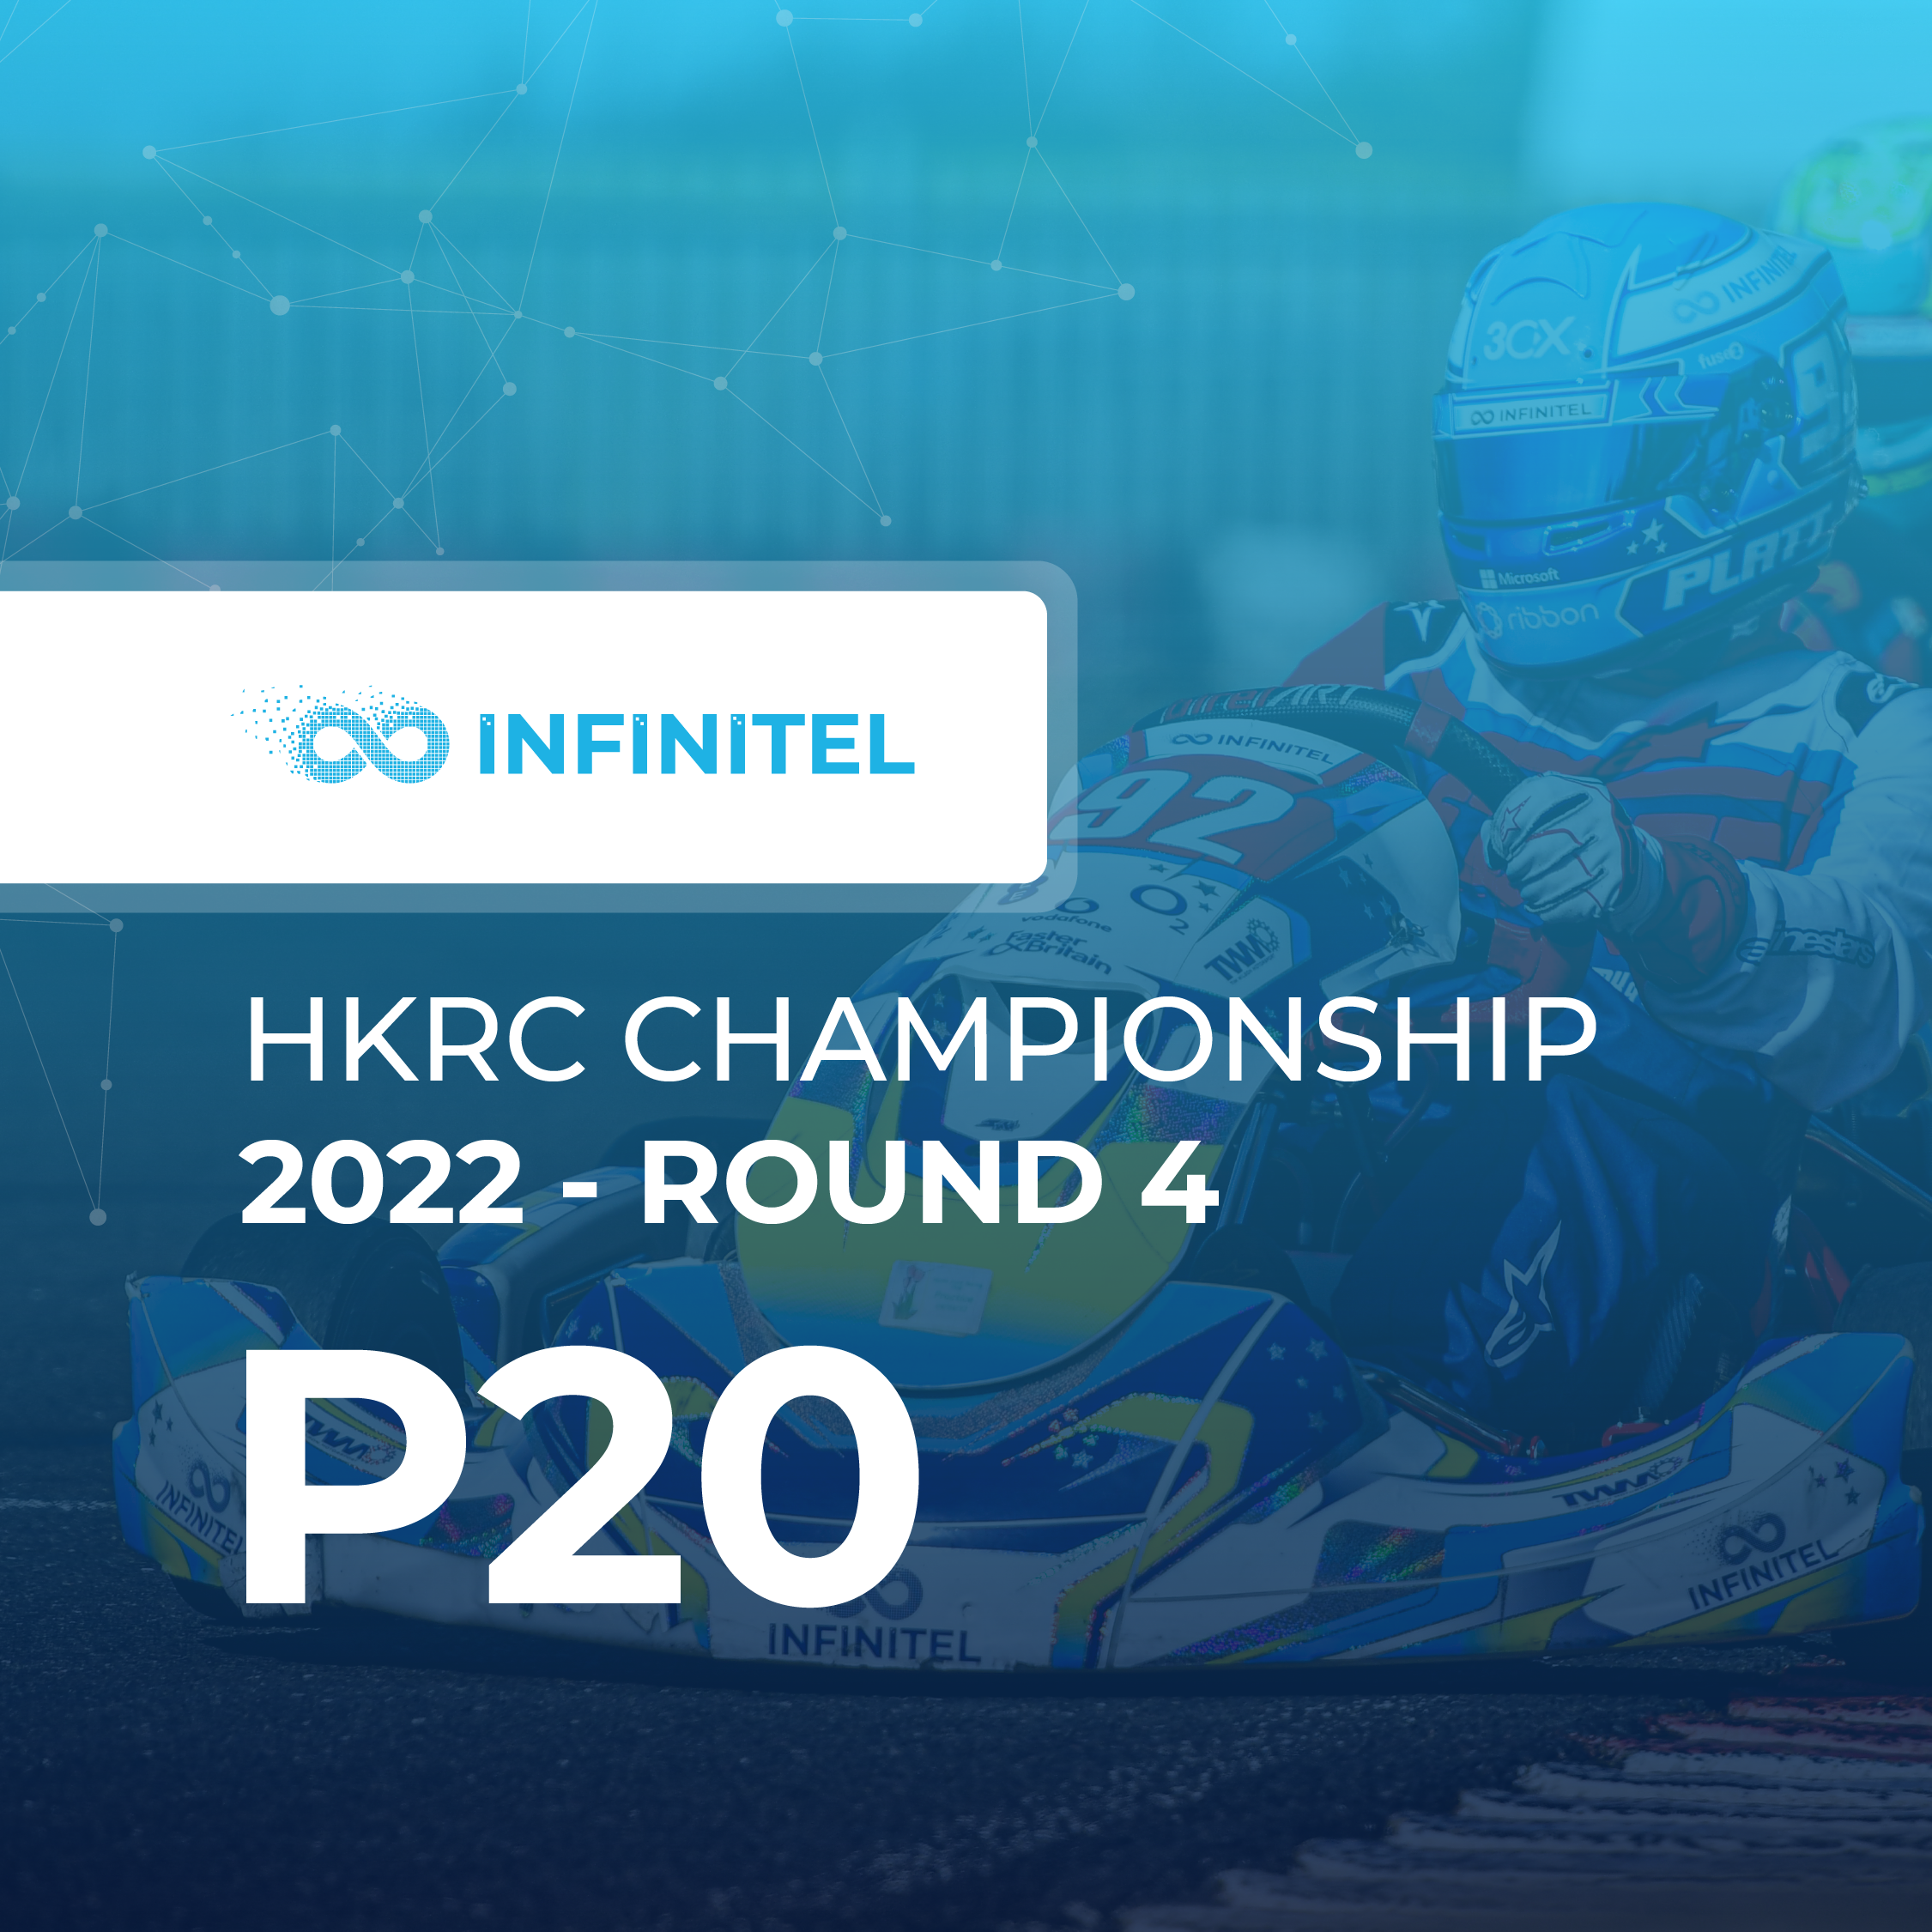 HKRC Championship 2022 – Round 4